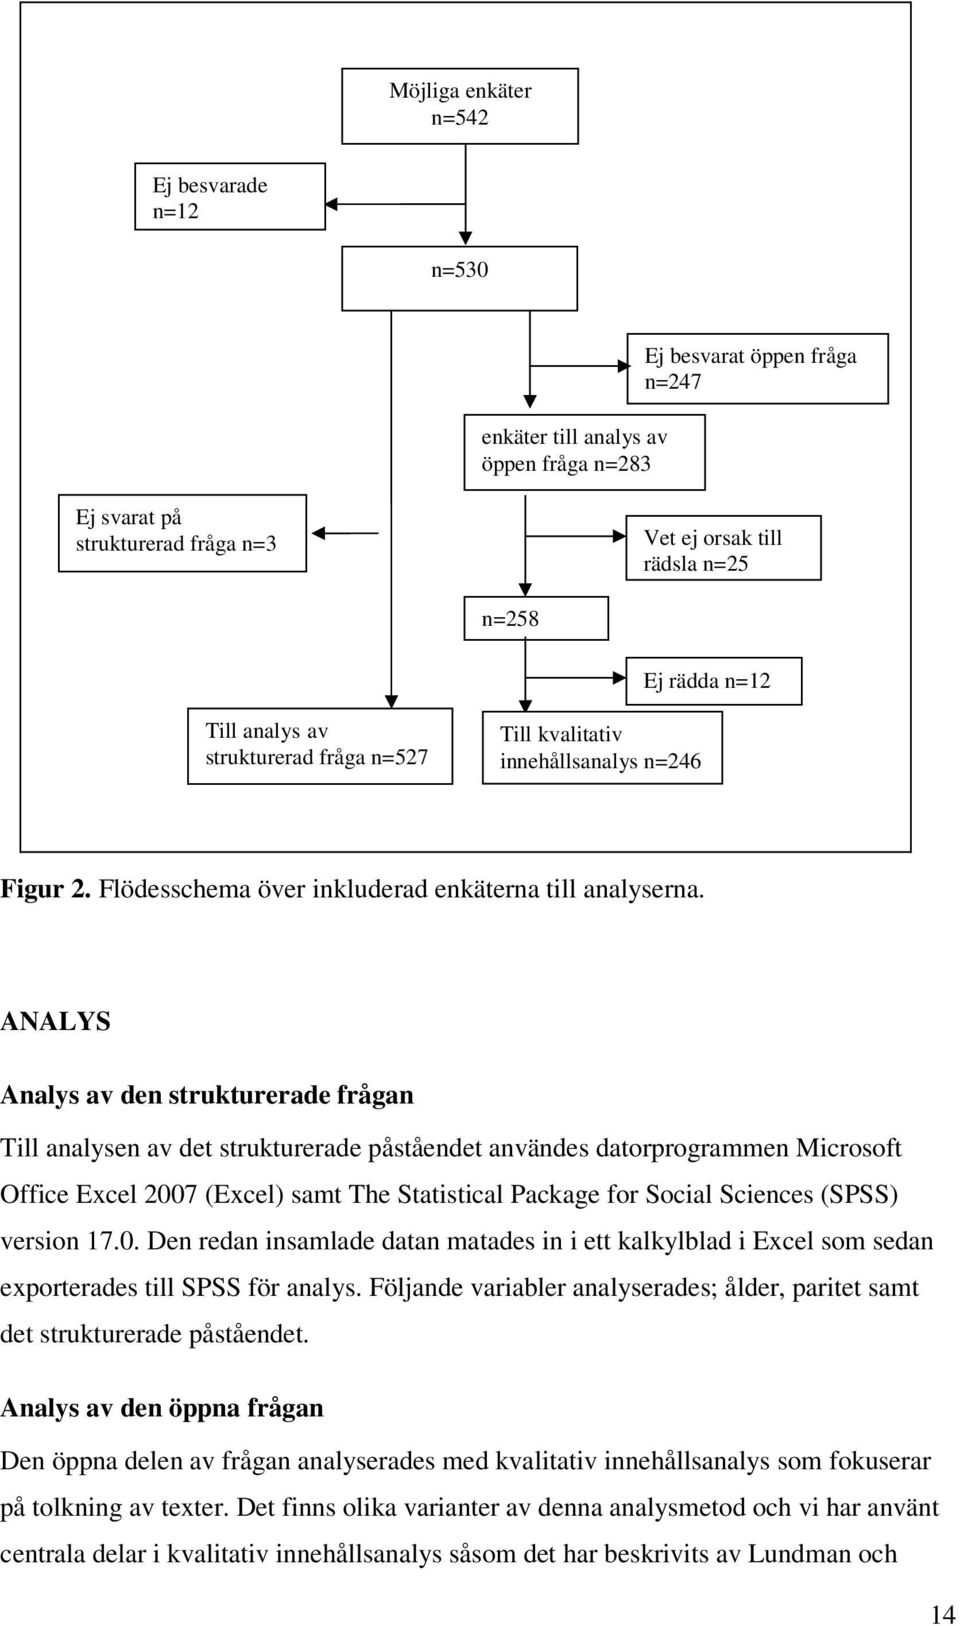 ANALYS Analys av den strukturerade frågan Till analysen av det strukturerade påståendet användes datorprogrammen Microsoft Office Excel 2007 (Excel) samt The Statistical Package for Social Sciences